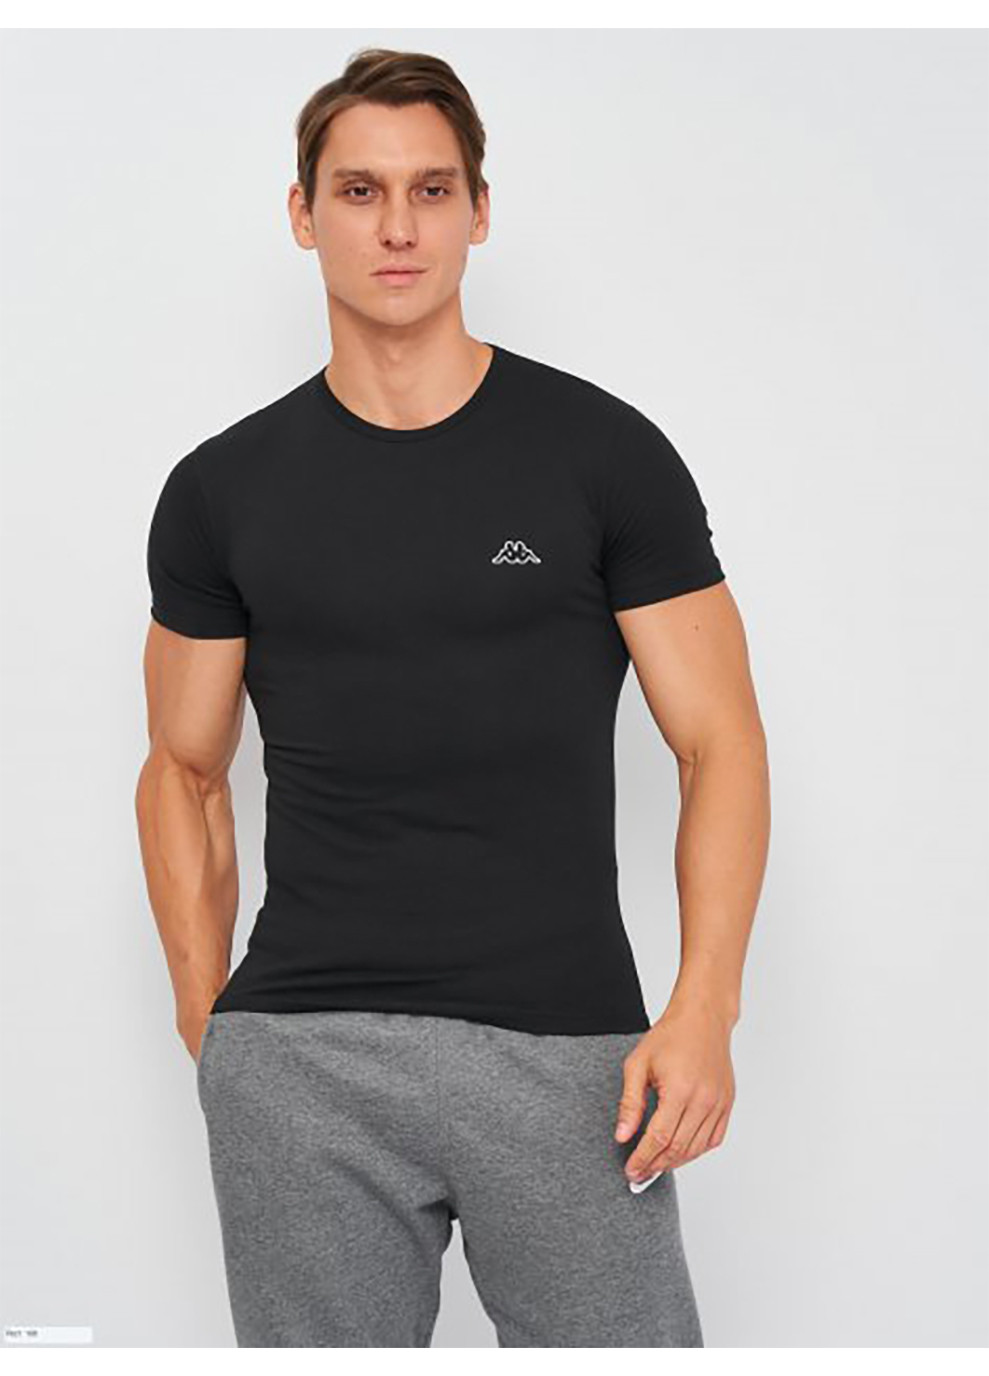 Черная футболка t-shirt mezza manica girocollo черный m муж k1305 nero-m Kappa